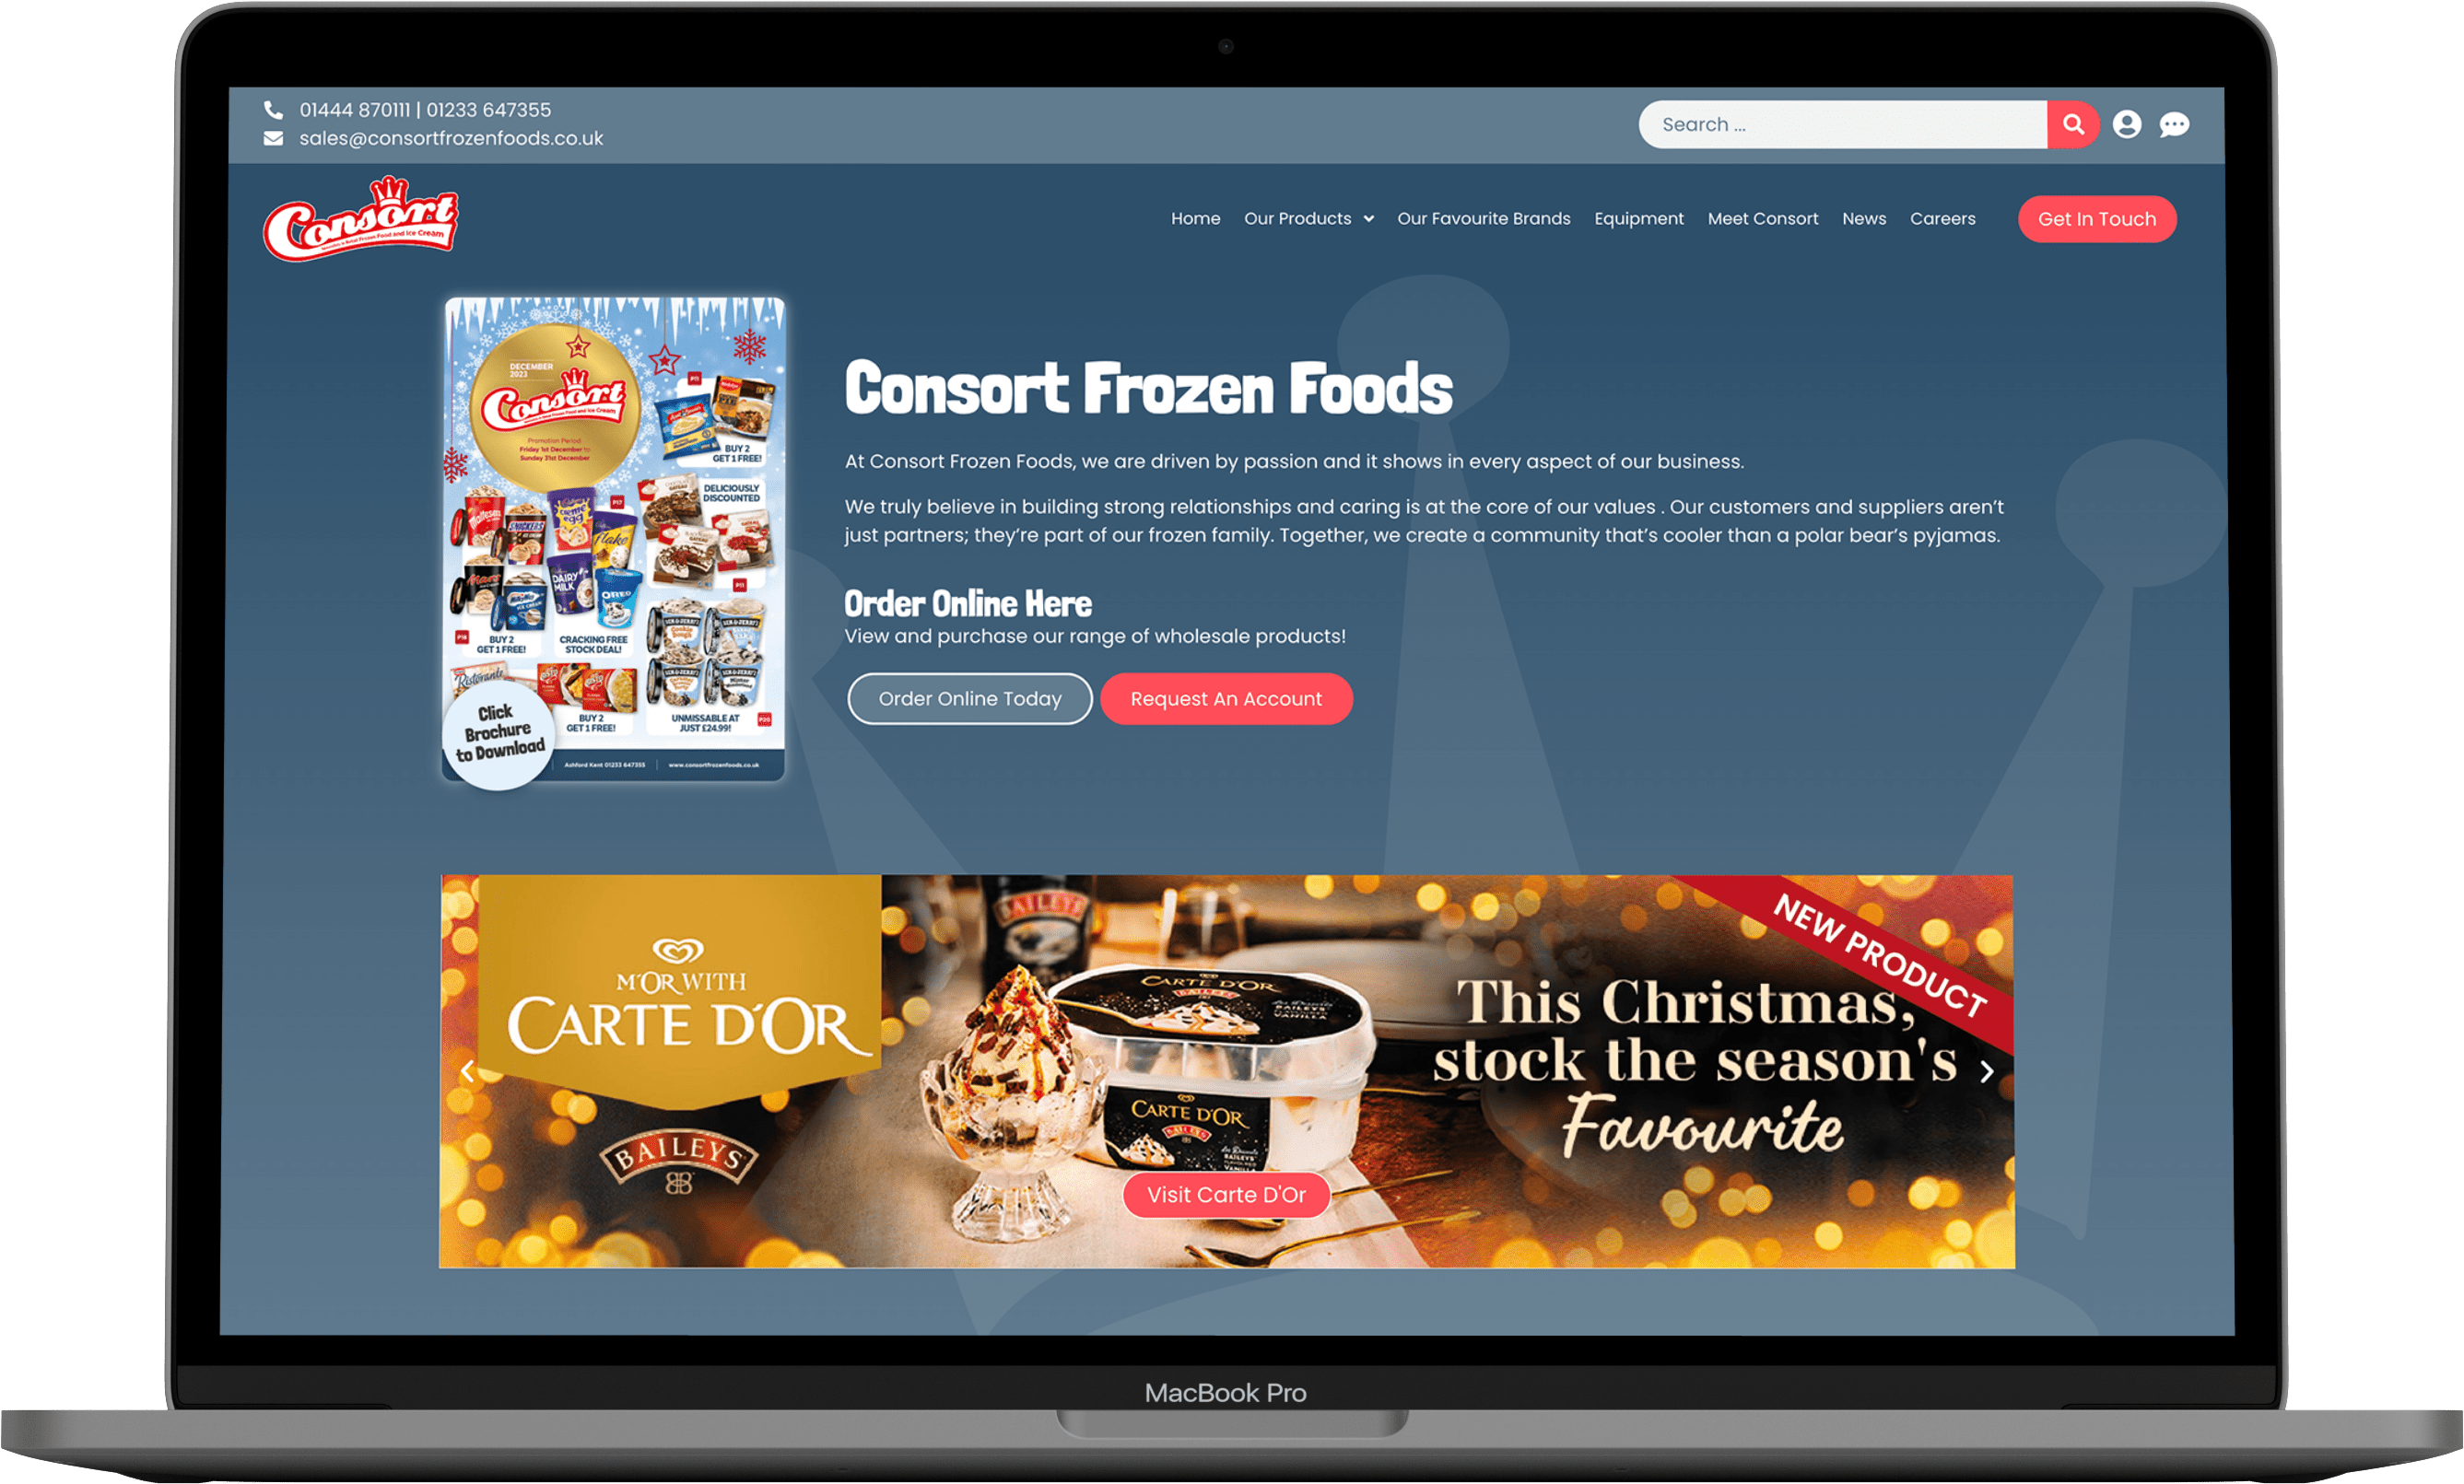 Consort Frozen Foods - Website Design and Development by Casper Creative